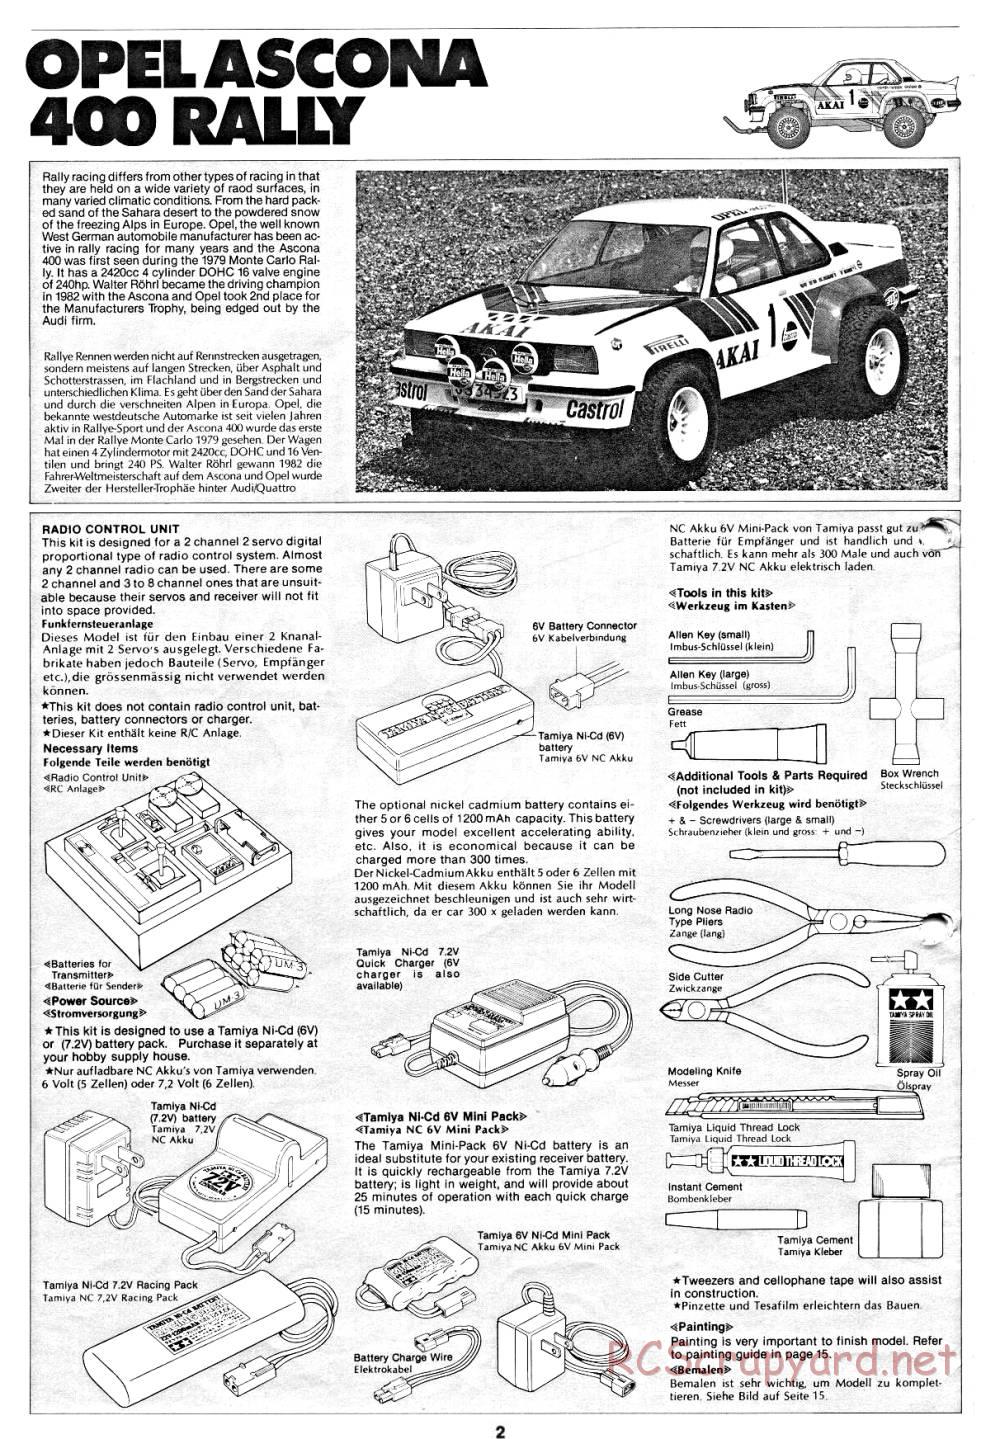 Tamiya - Opel Ascona 400 Rally - 58037 - Manual - Page 2